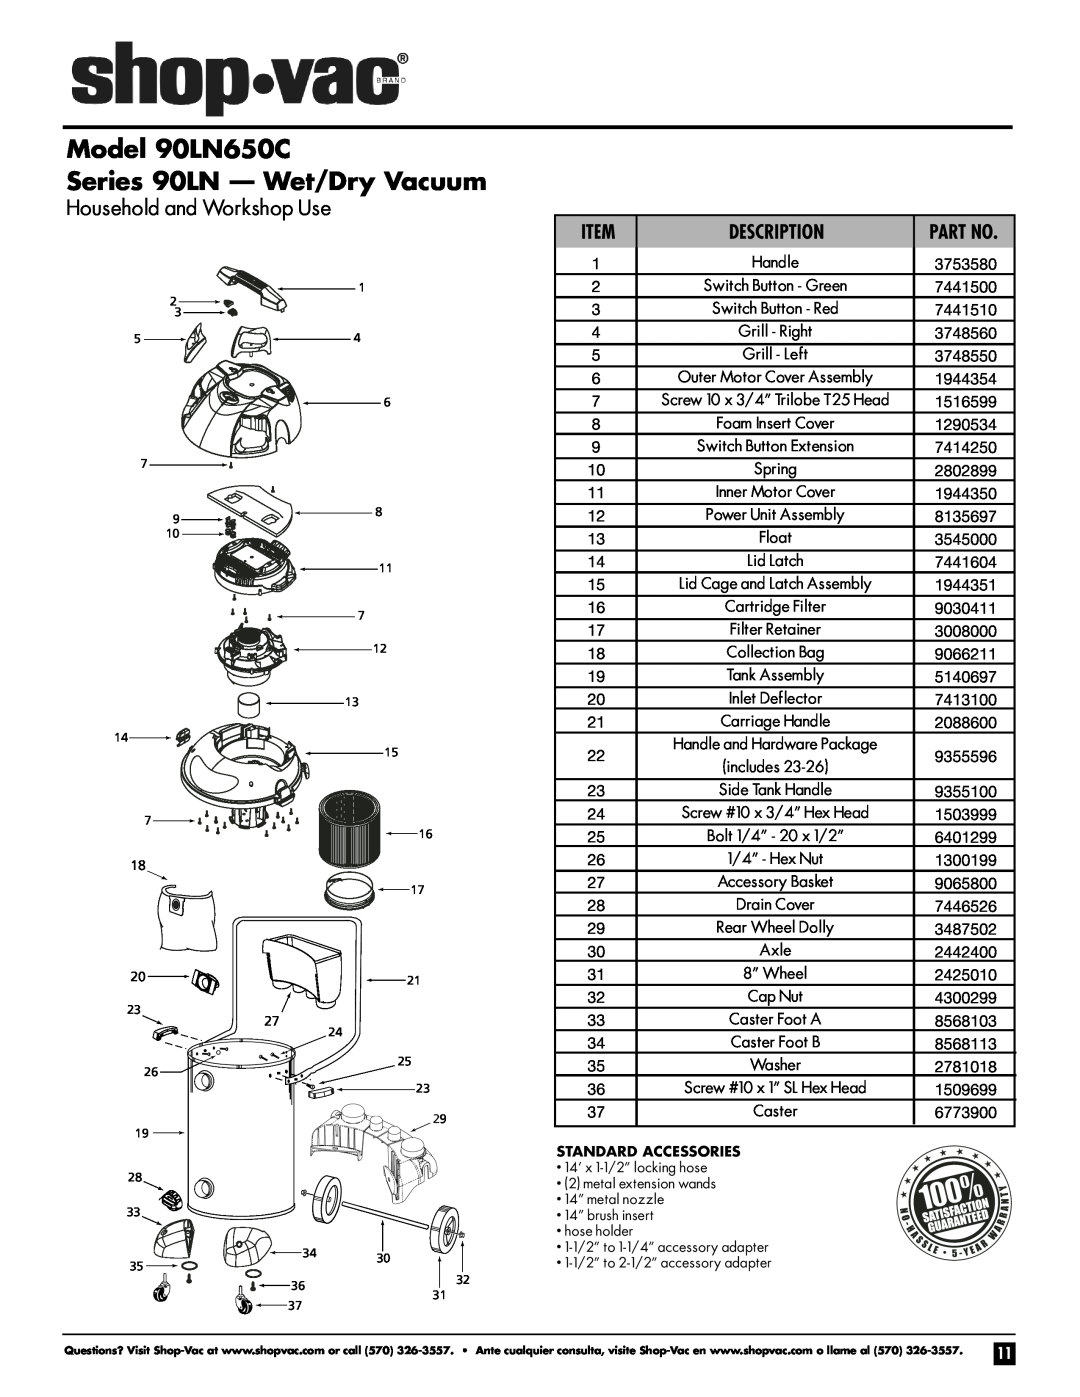 Shop-Vac Model 90LN650C Series 90LN - Wet/Dry Vacuum, Household and Workshop Use, Description 